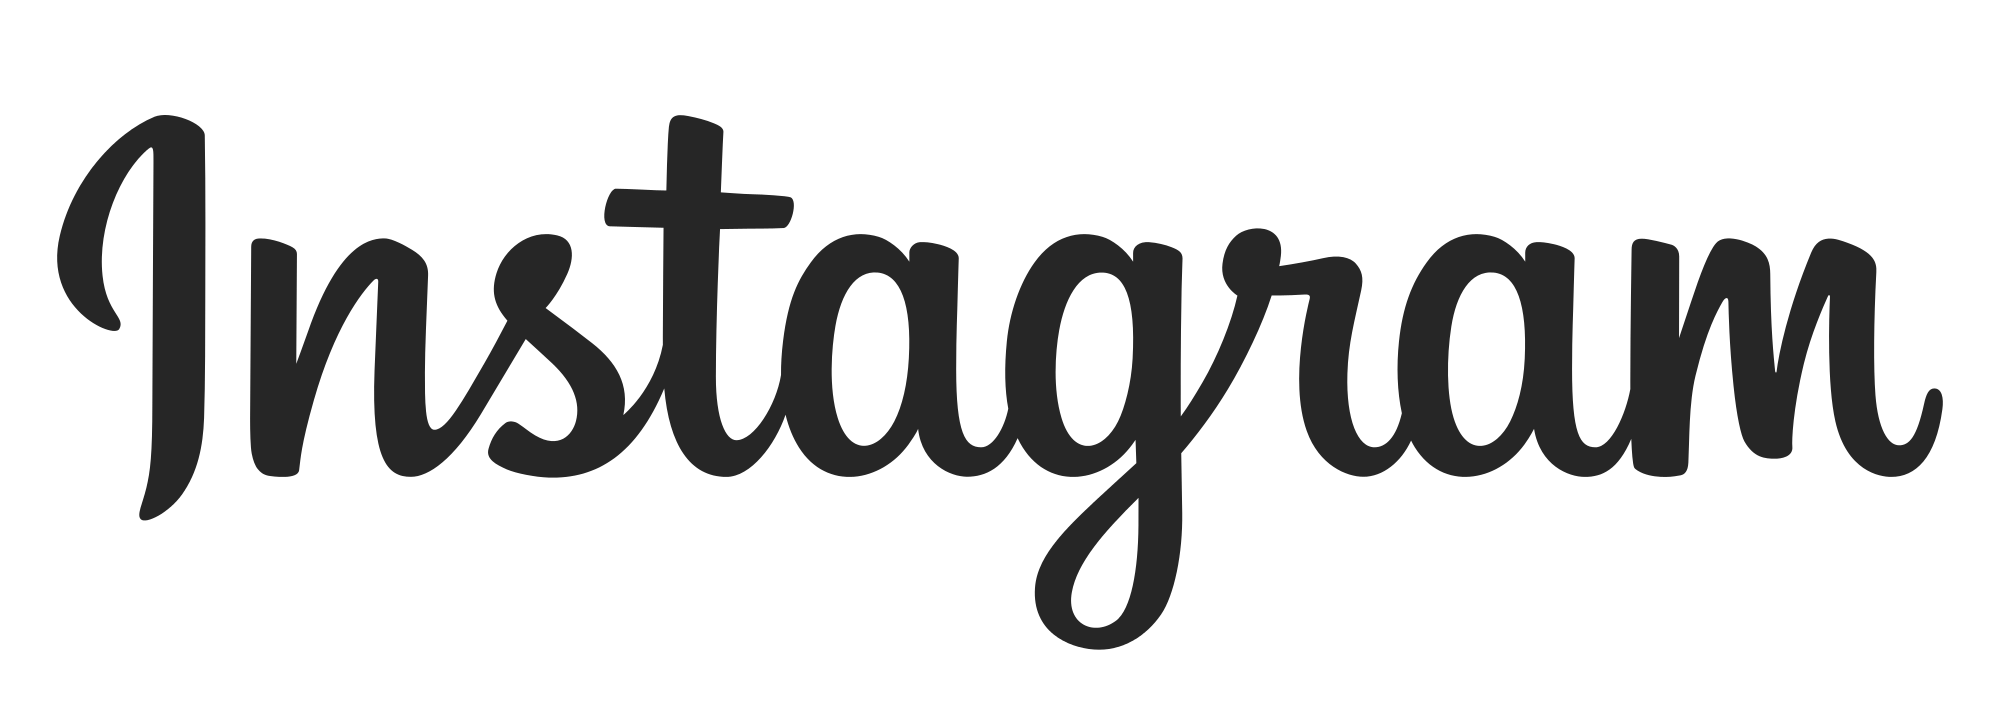 Instagram IG logo PNG صورة شفافة